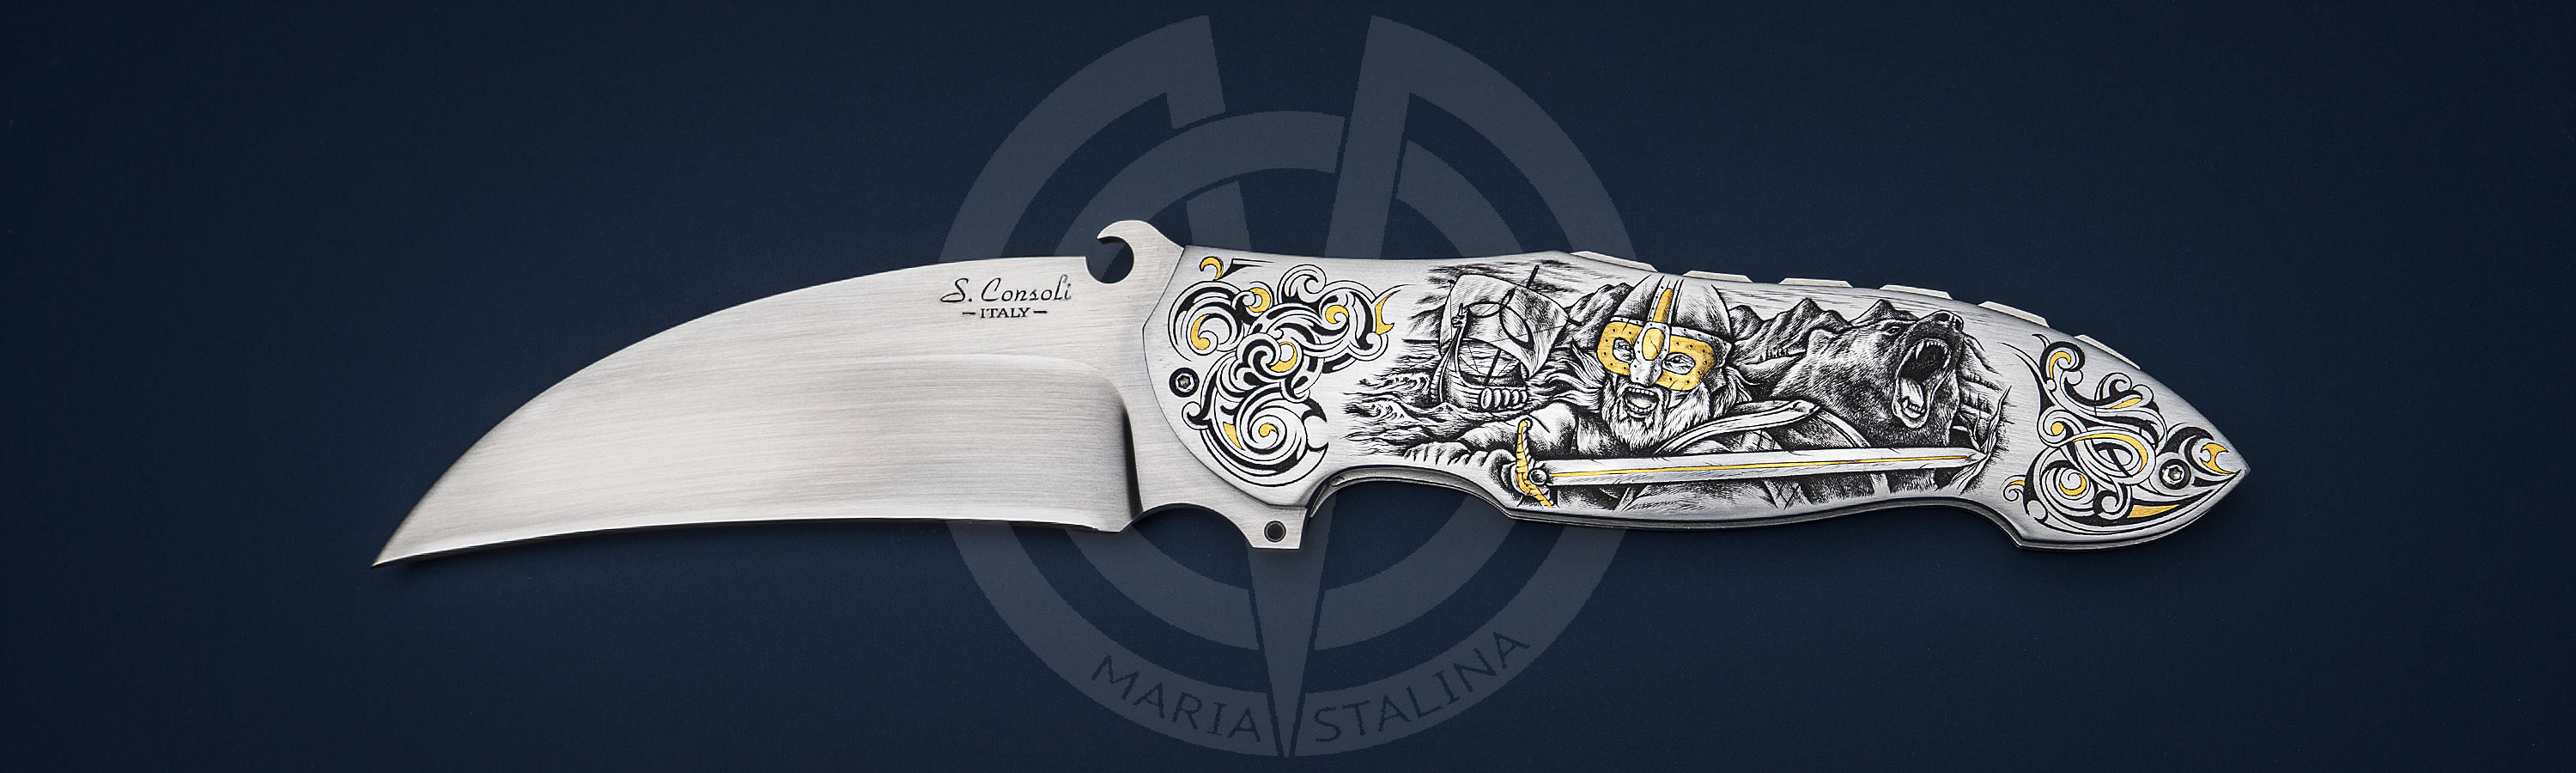 Коллекционный нож Wild Vikings Сержио Консоли